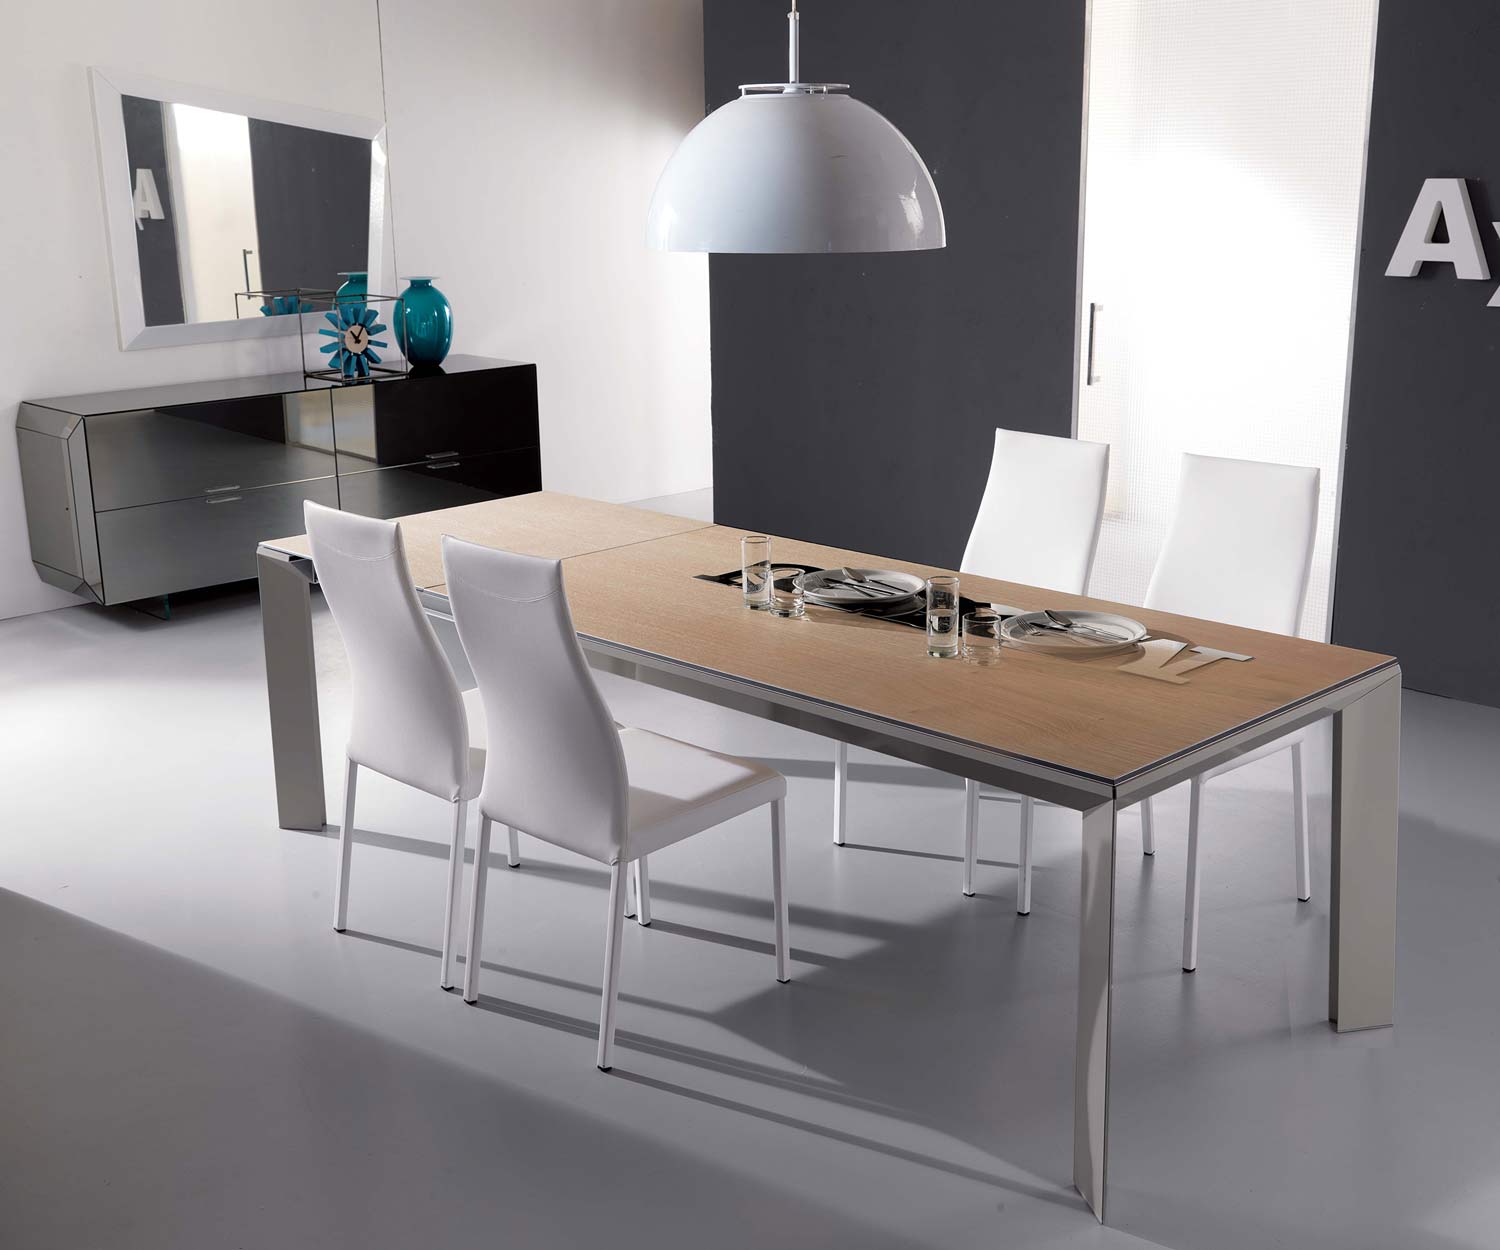 High-quality Ozzio Blitz design dining chair